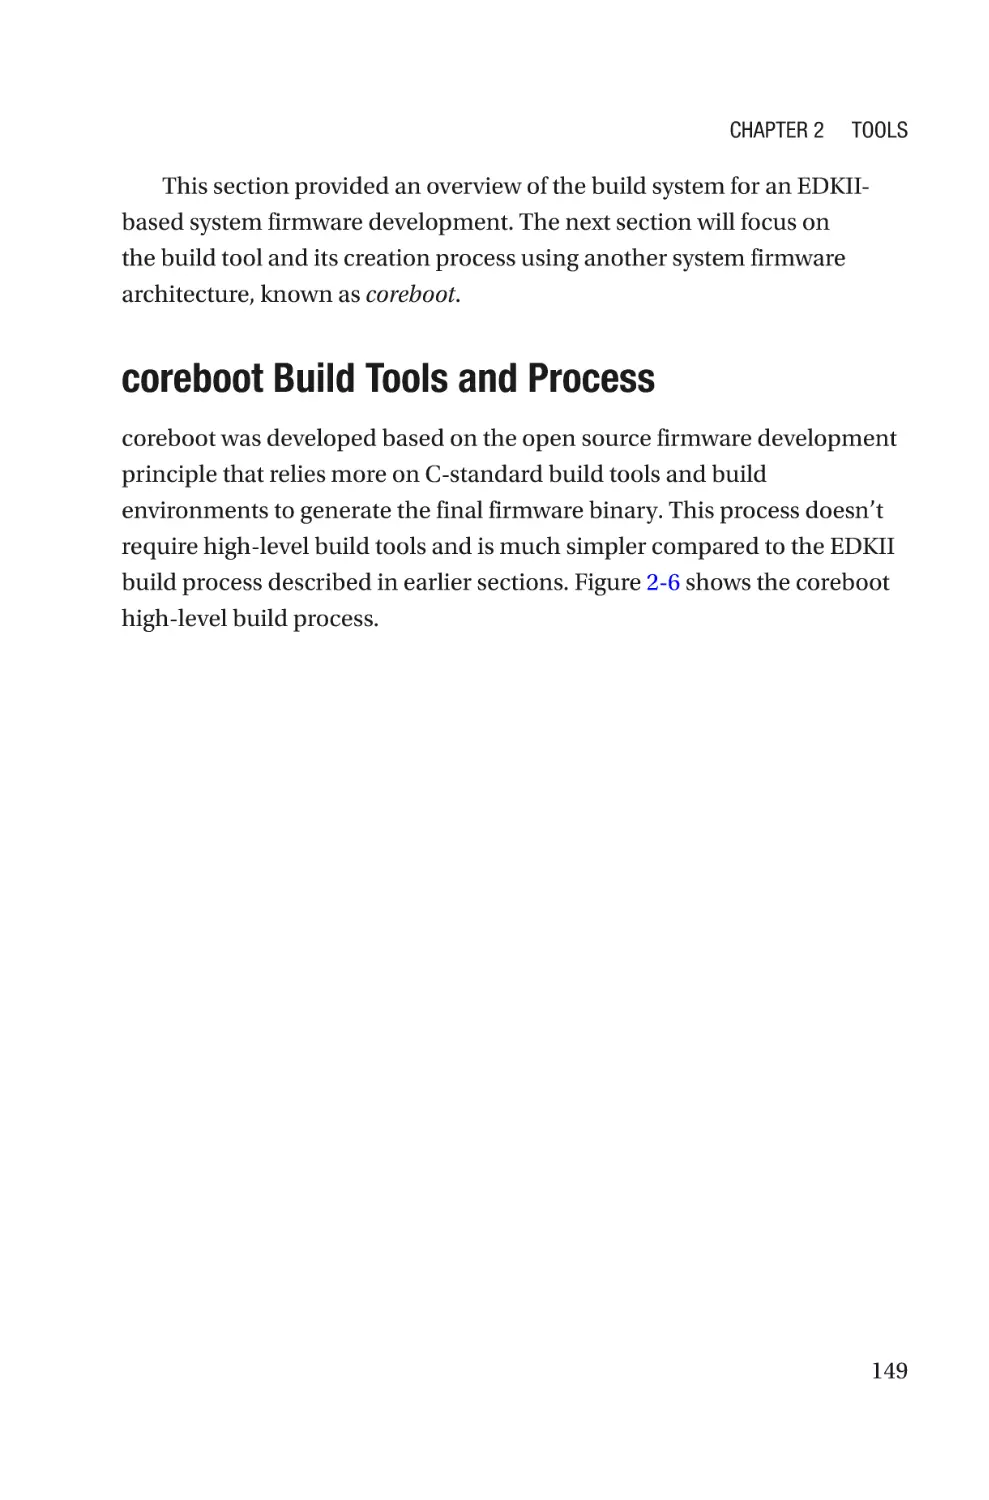 coreboot Build Tools and Process